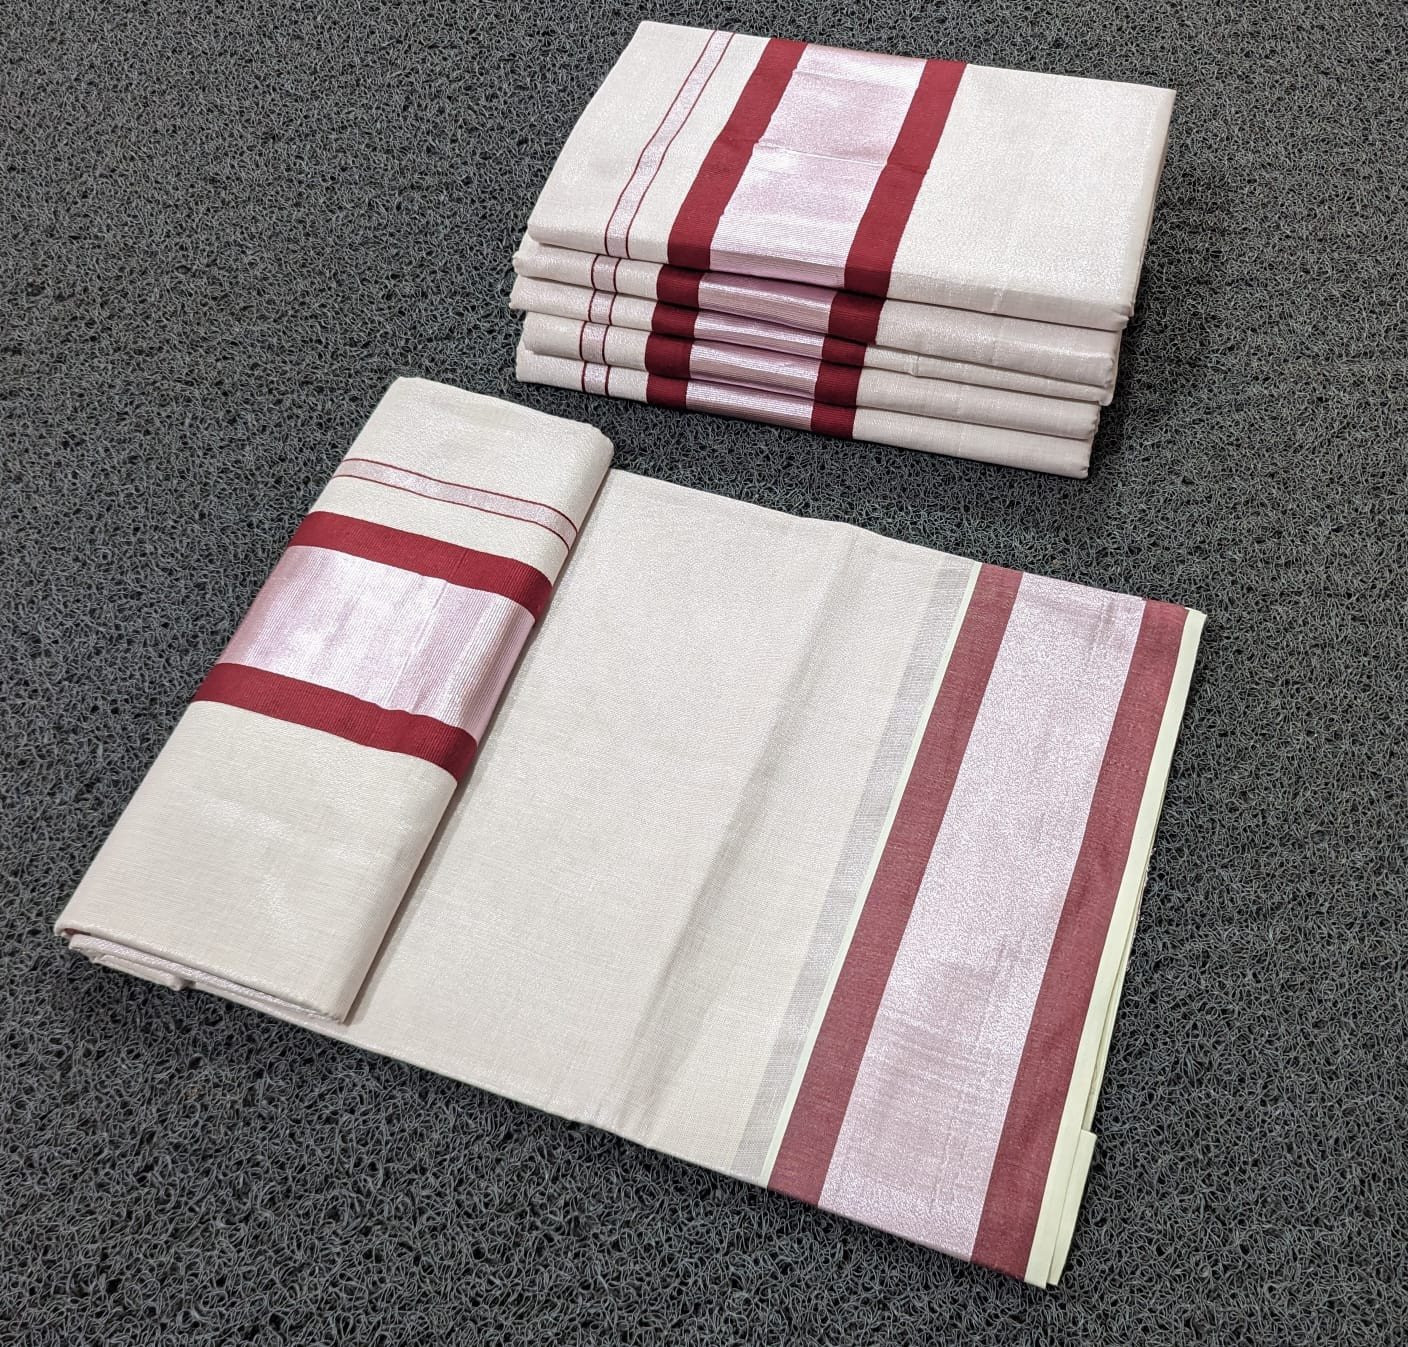 Sai Ram Textiles Kerala Kuthampully Premium Quality Rose Gold Colour Tissue Saree - Red & Green | Kerala Set Saree